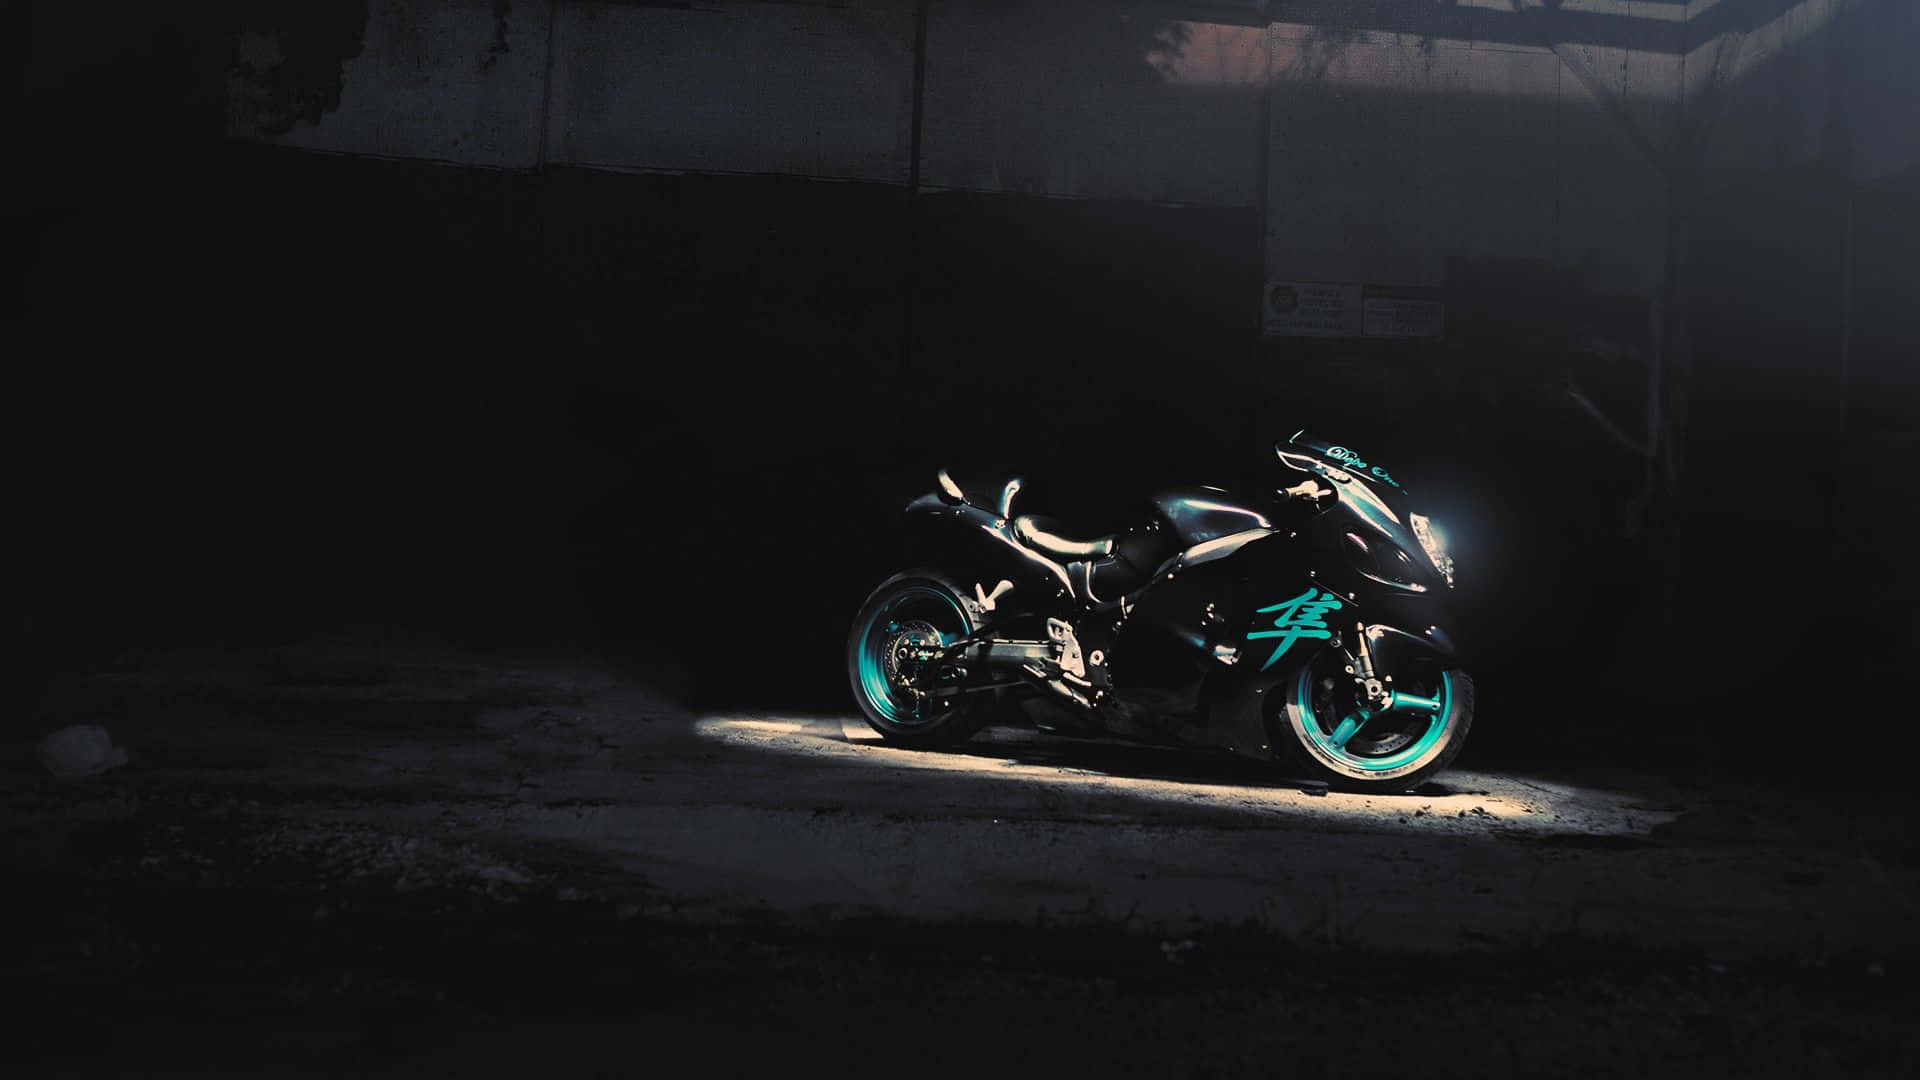 Forbløffendesuzuki Hayabusa Motorcykel Baggrundsbillede.